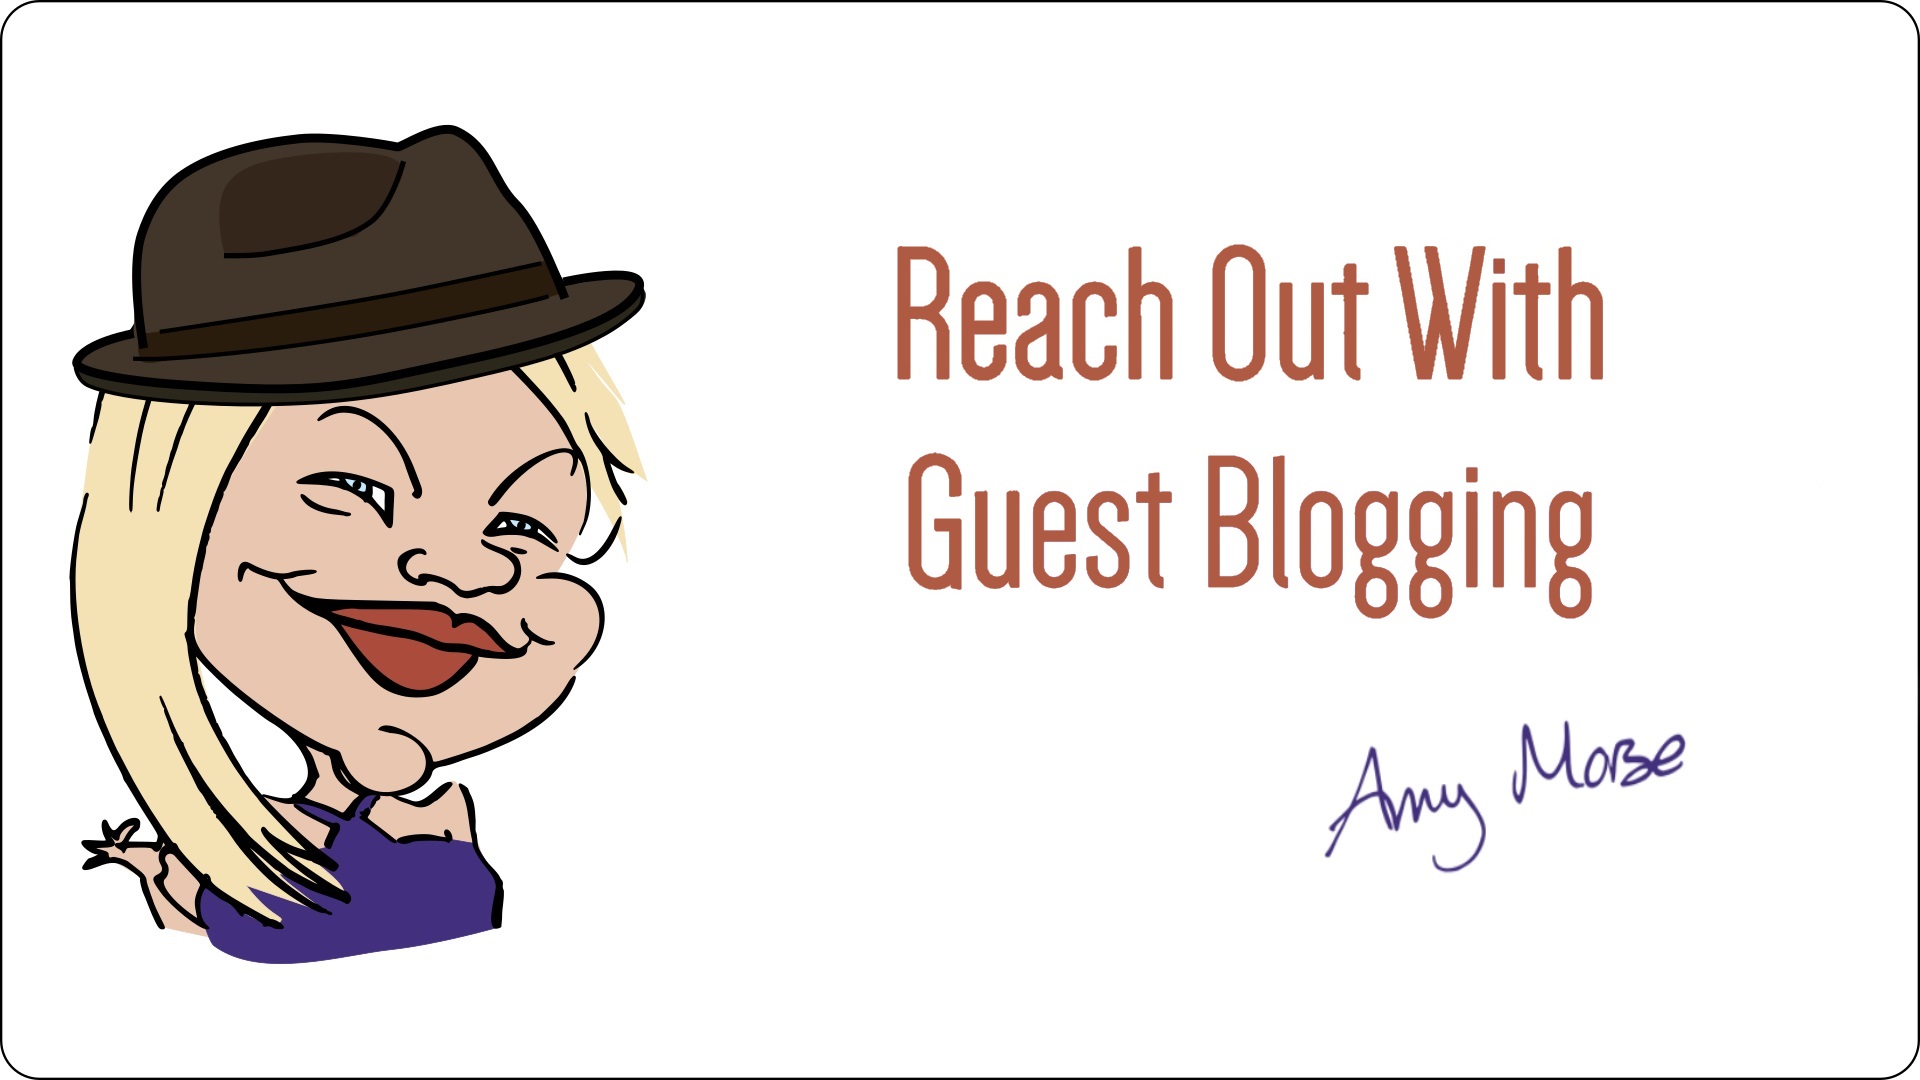 Guest blogging challenges